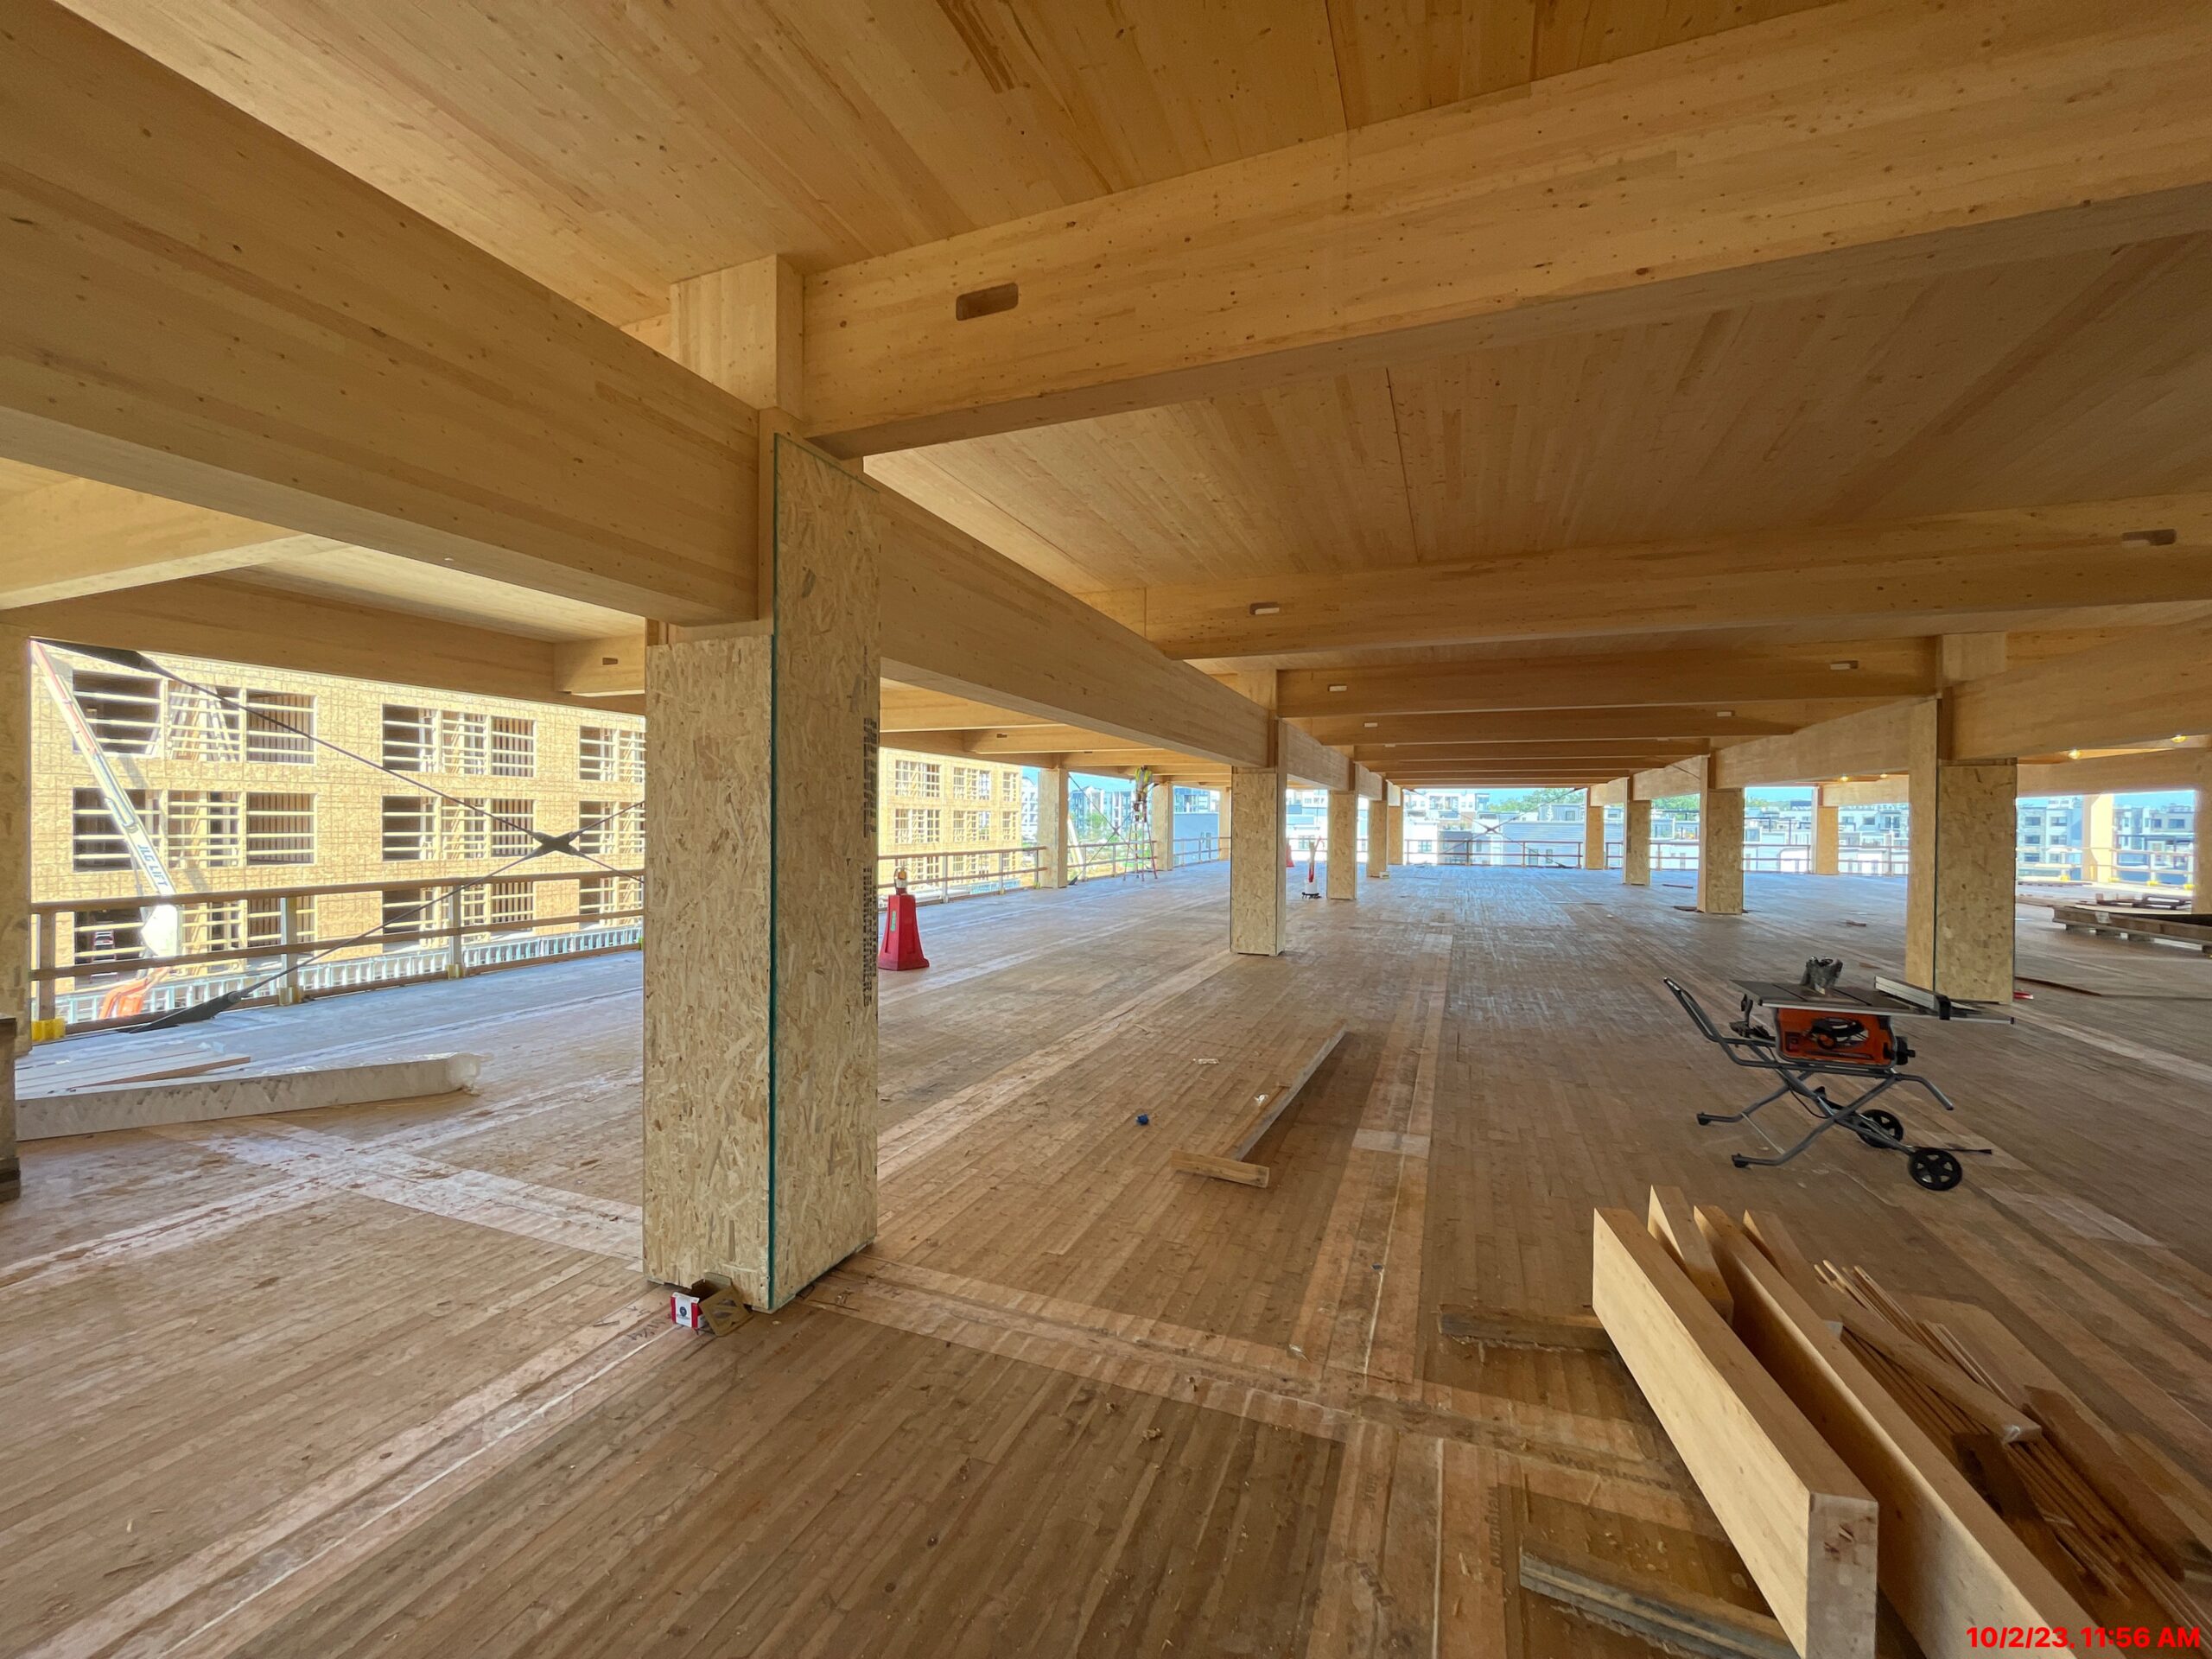 Interior view of Ellis Mass Timber Frame building